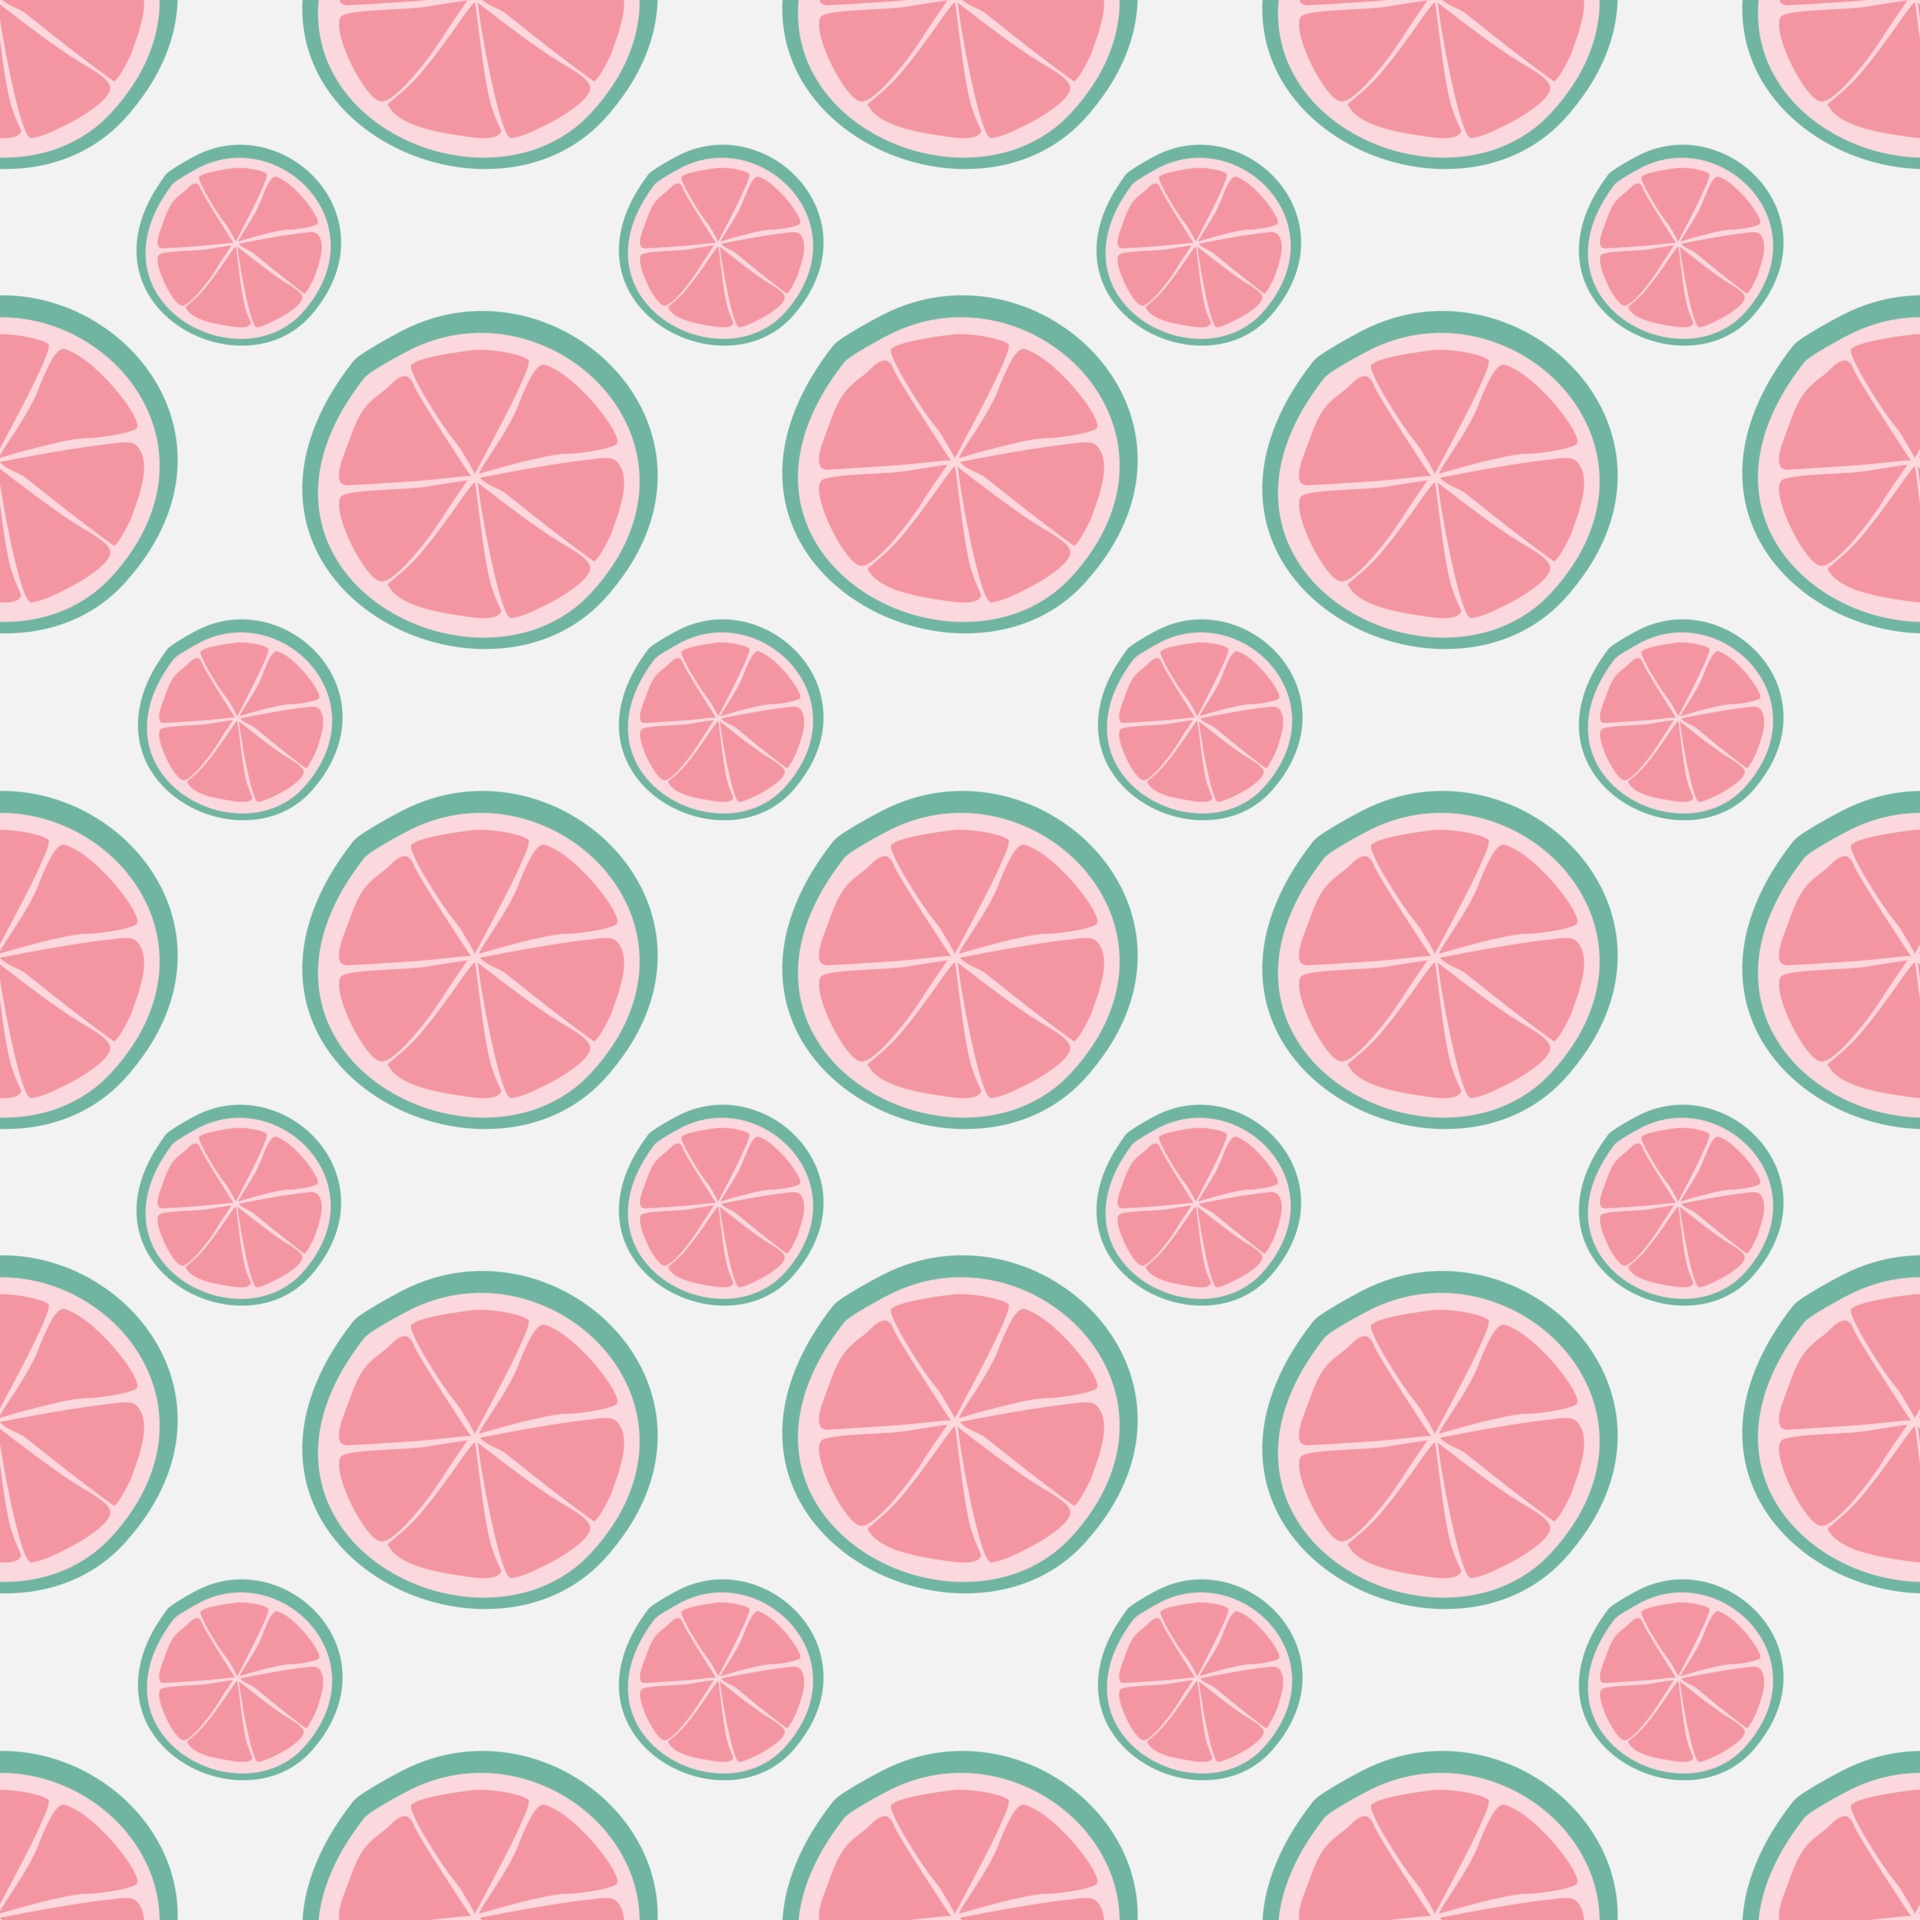 Summer fruit pattern of lemons and lemon slices on a pastel pink background   Stock Image  Everypixel